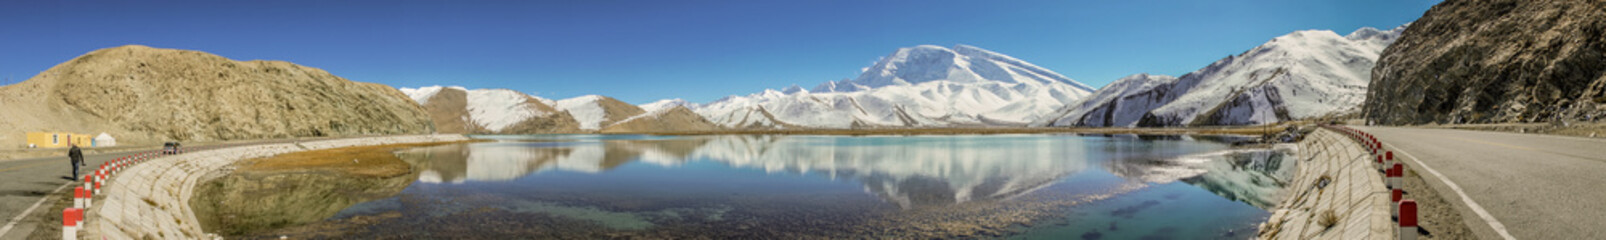 Karakul Lake with Mutztagh Ata Xinjiang China 